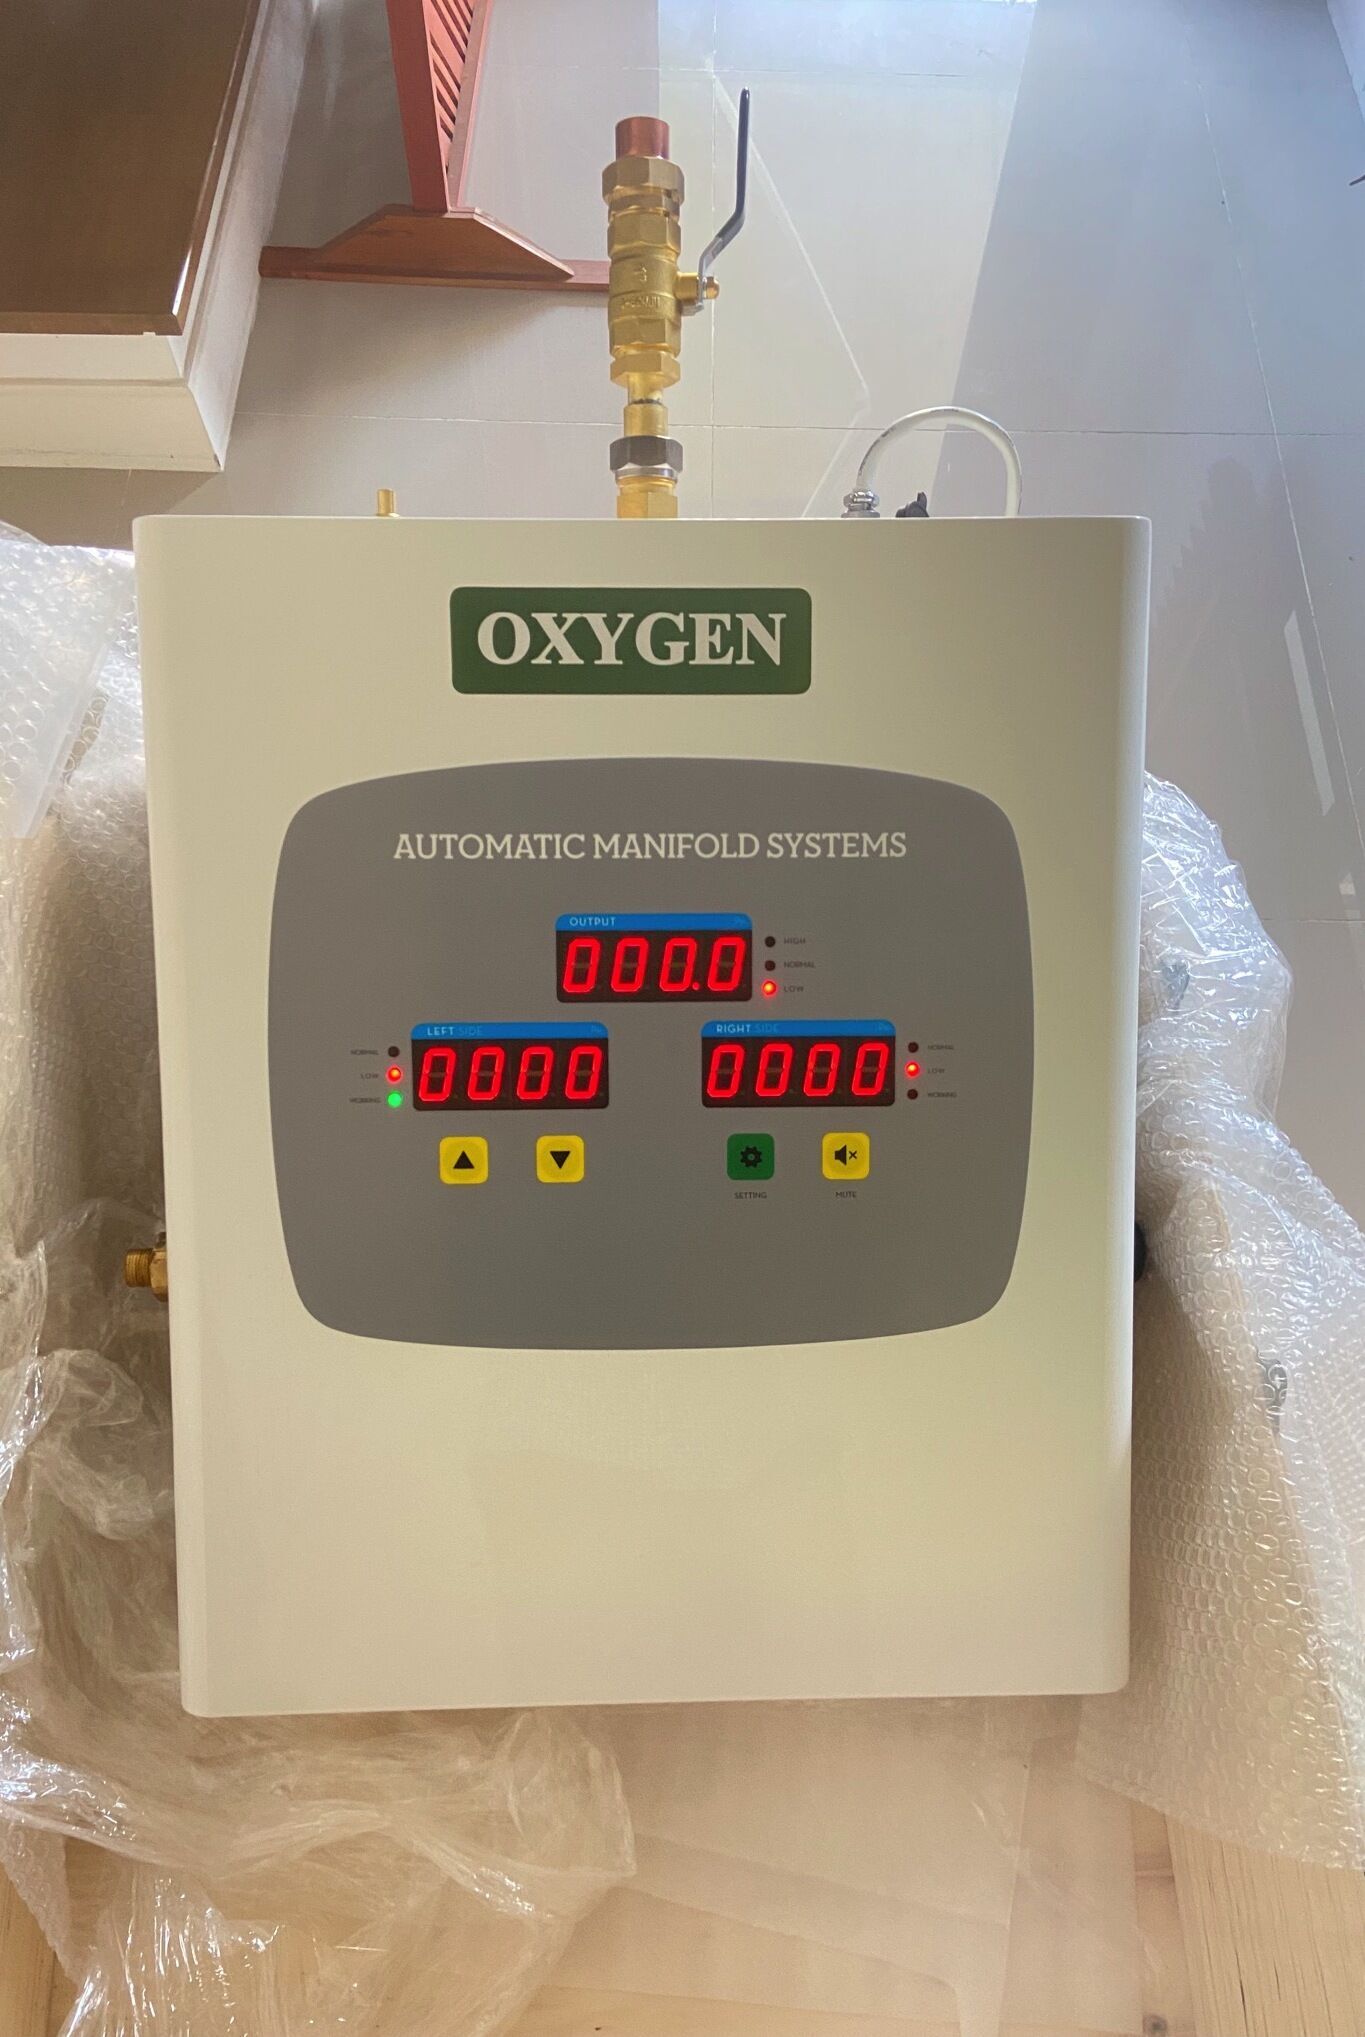 Automatic Manifold Systems for Hospital Oxygen Plant Gas Station_ชุดเครื่องมานิโฟลว์ควบคุมการจ่ายออกซิเจนจากสถานีถังก๊าซออกซิเจนแบบอัตโนมัติ